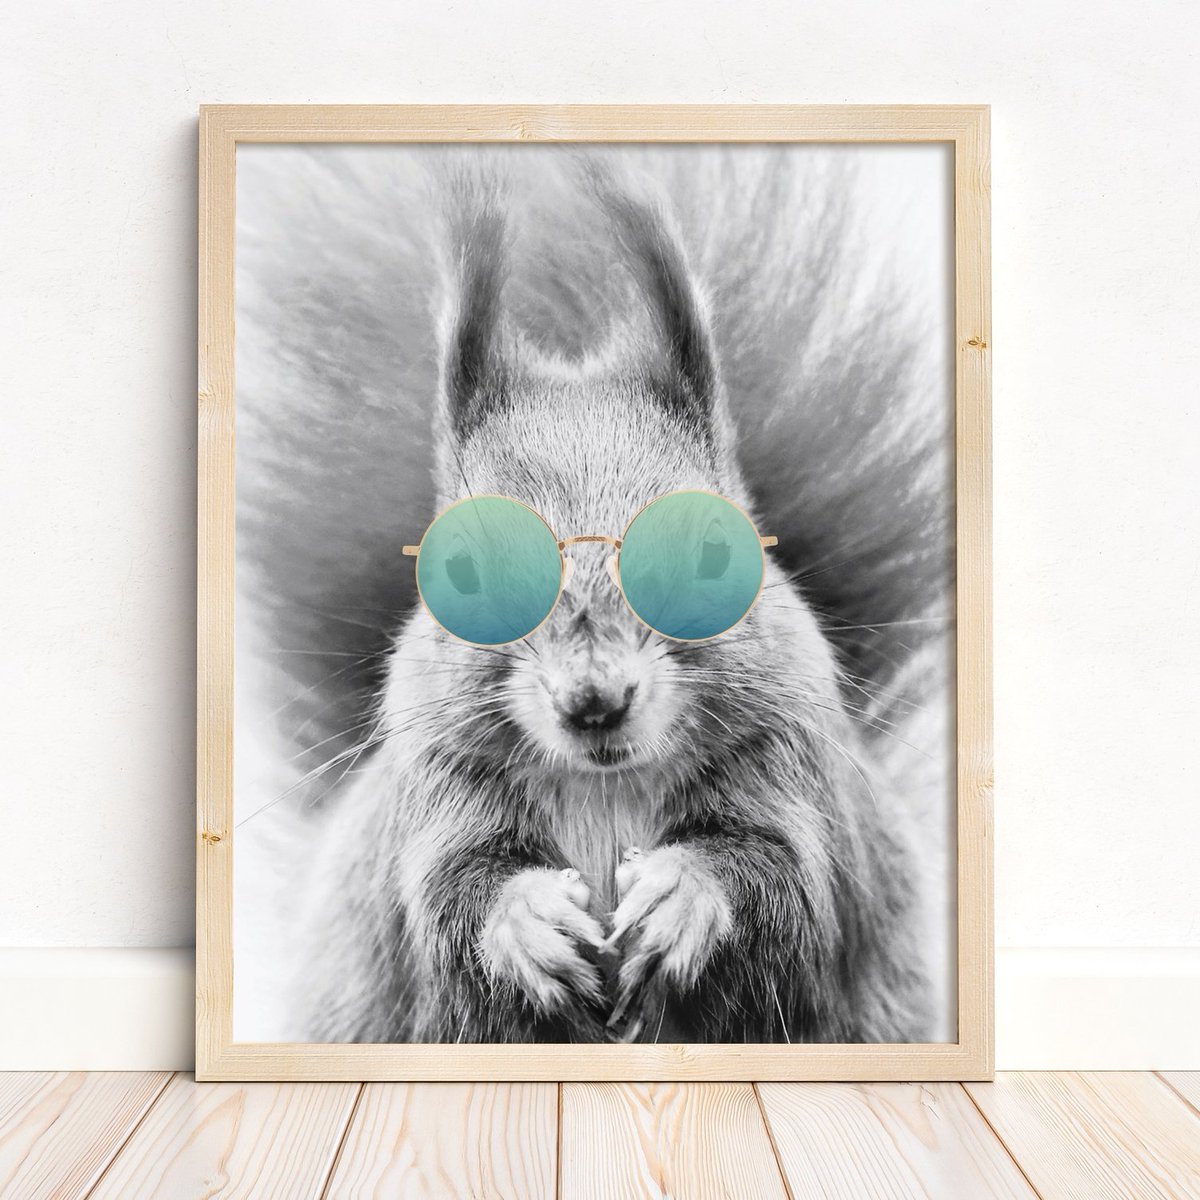 Adorable squirrel with sunglasses digital print!💝 #squirrel #squirrelprint #squirrelposter #squirrelwithsunglasses #printablewallart #roomdecor #homedecor #homewallart #roomwallart #squirrelwallart #etsy #etsygifts #etsyfinds #etsyshop #pixelandjoy